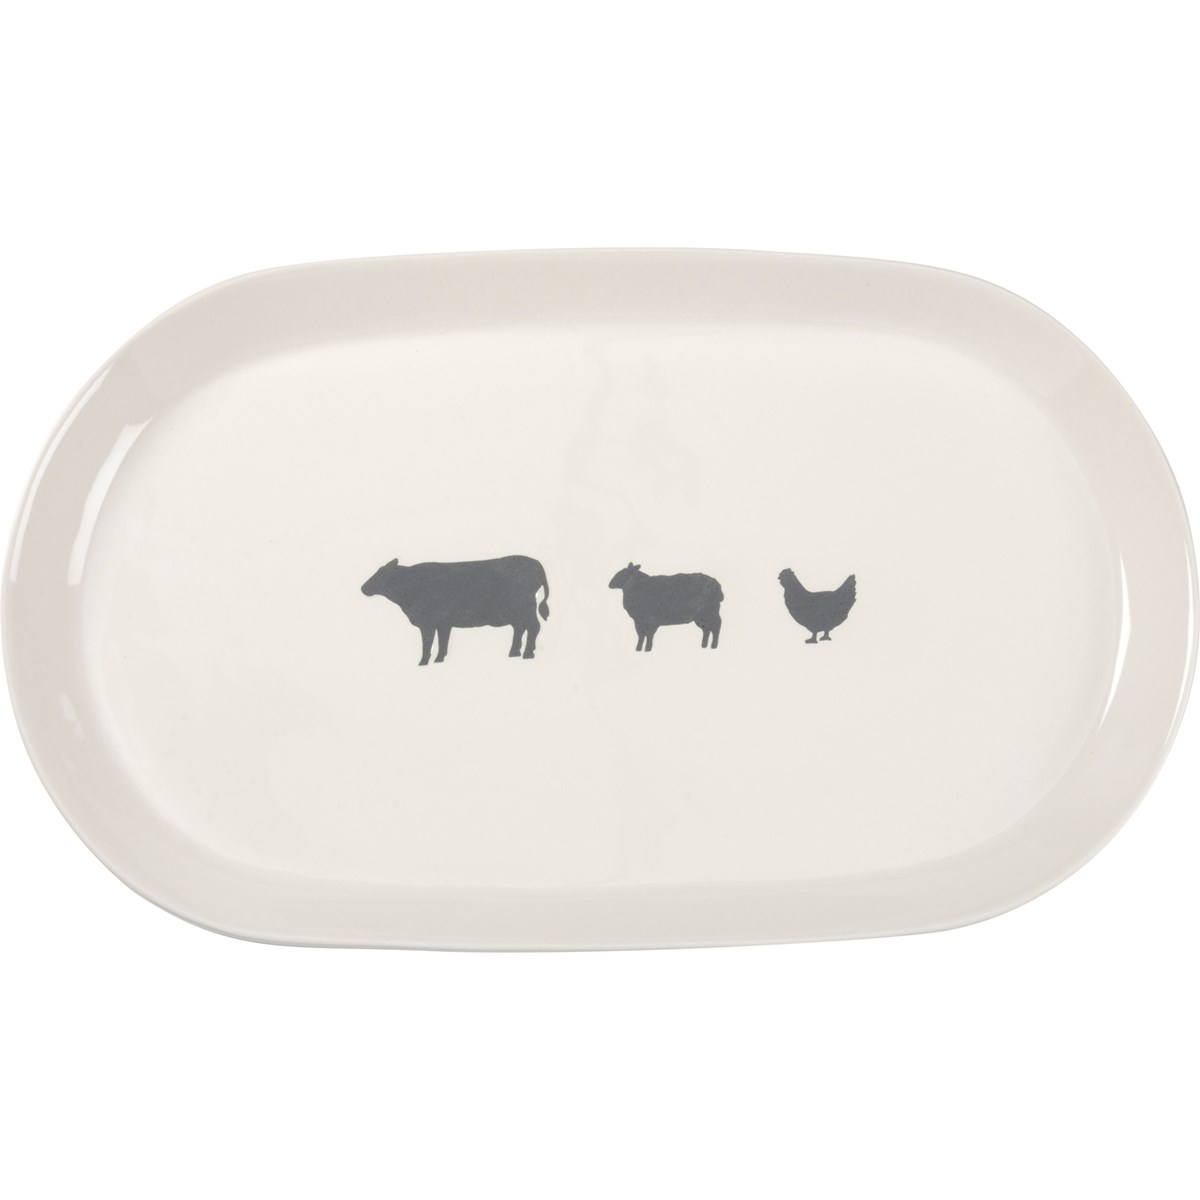 Farm Animals Oval Platter - Stoneware